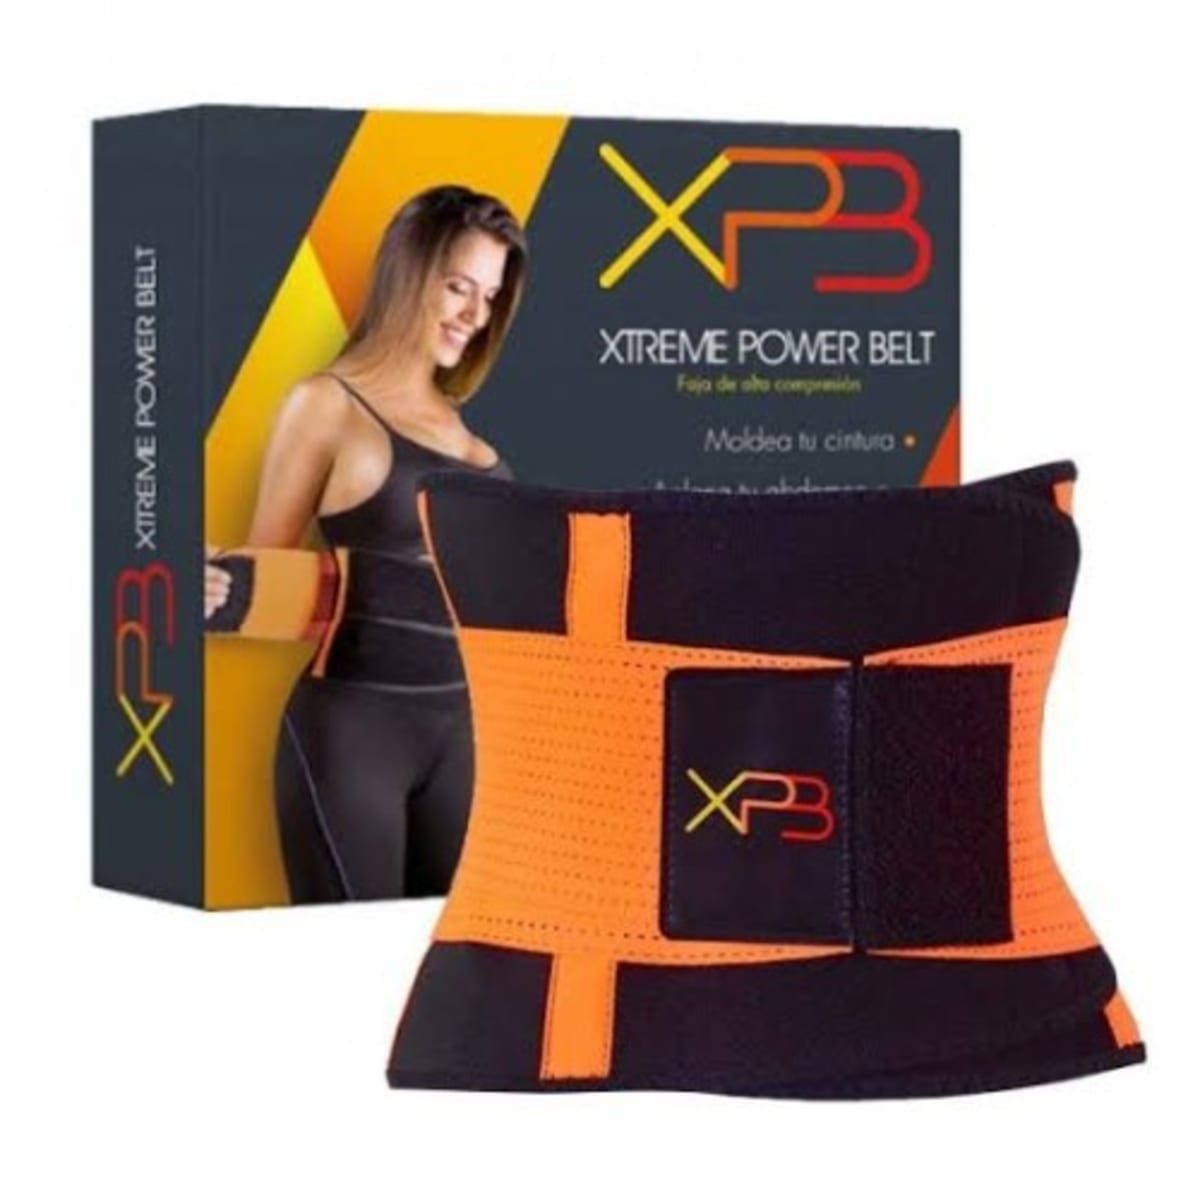 XPB – Xtreme Power Belt